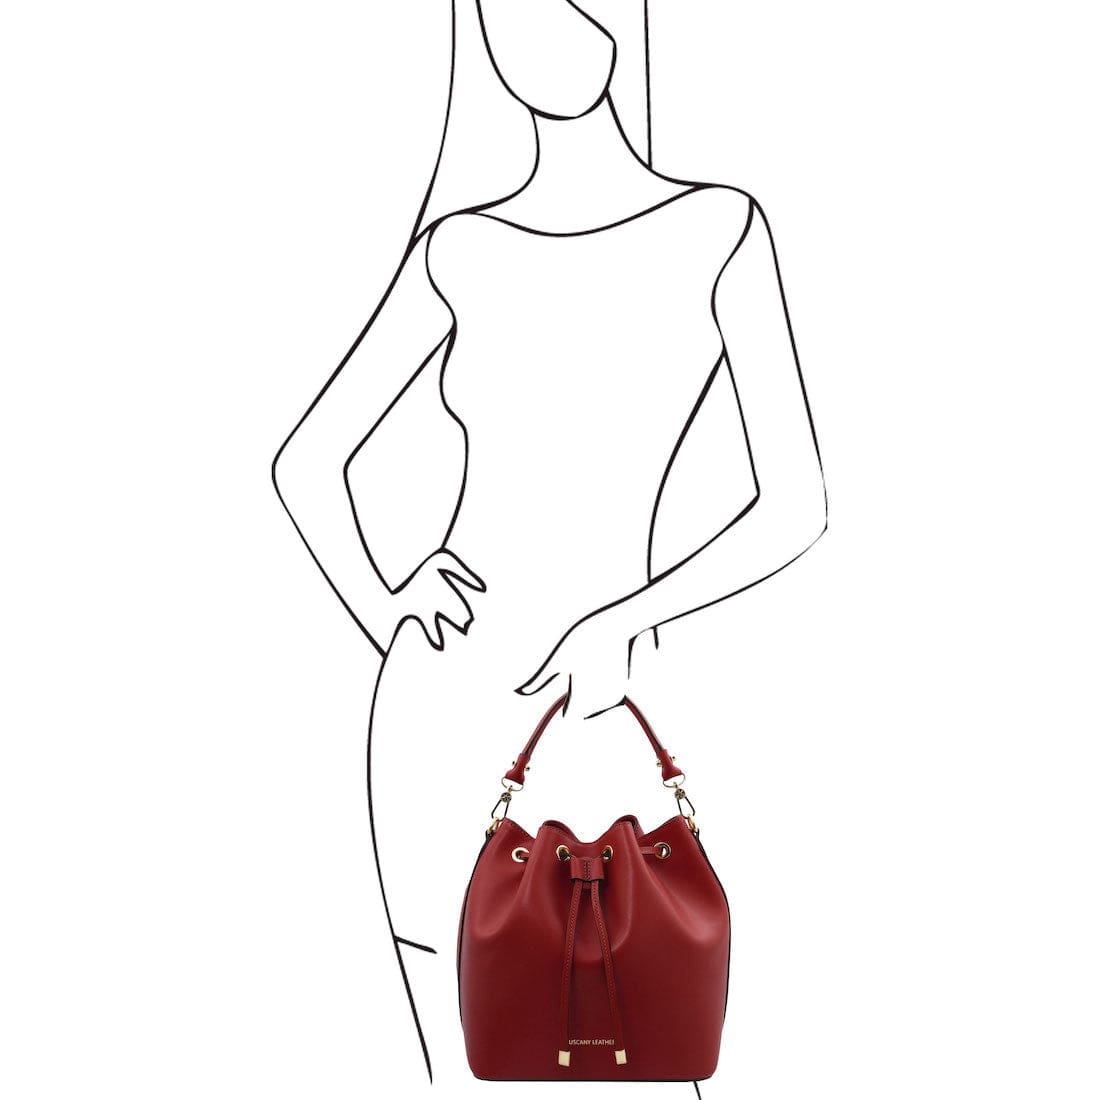 Vittoria - Leather bucket bag | TL141531 - Premium Leather handbags - Just €152.50! Shop now at San Rocco Italia